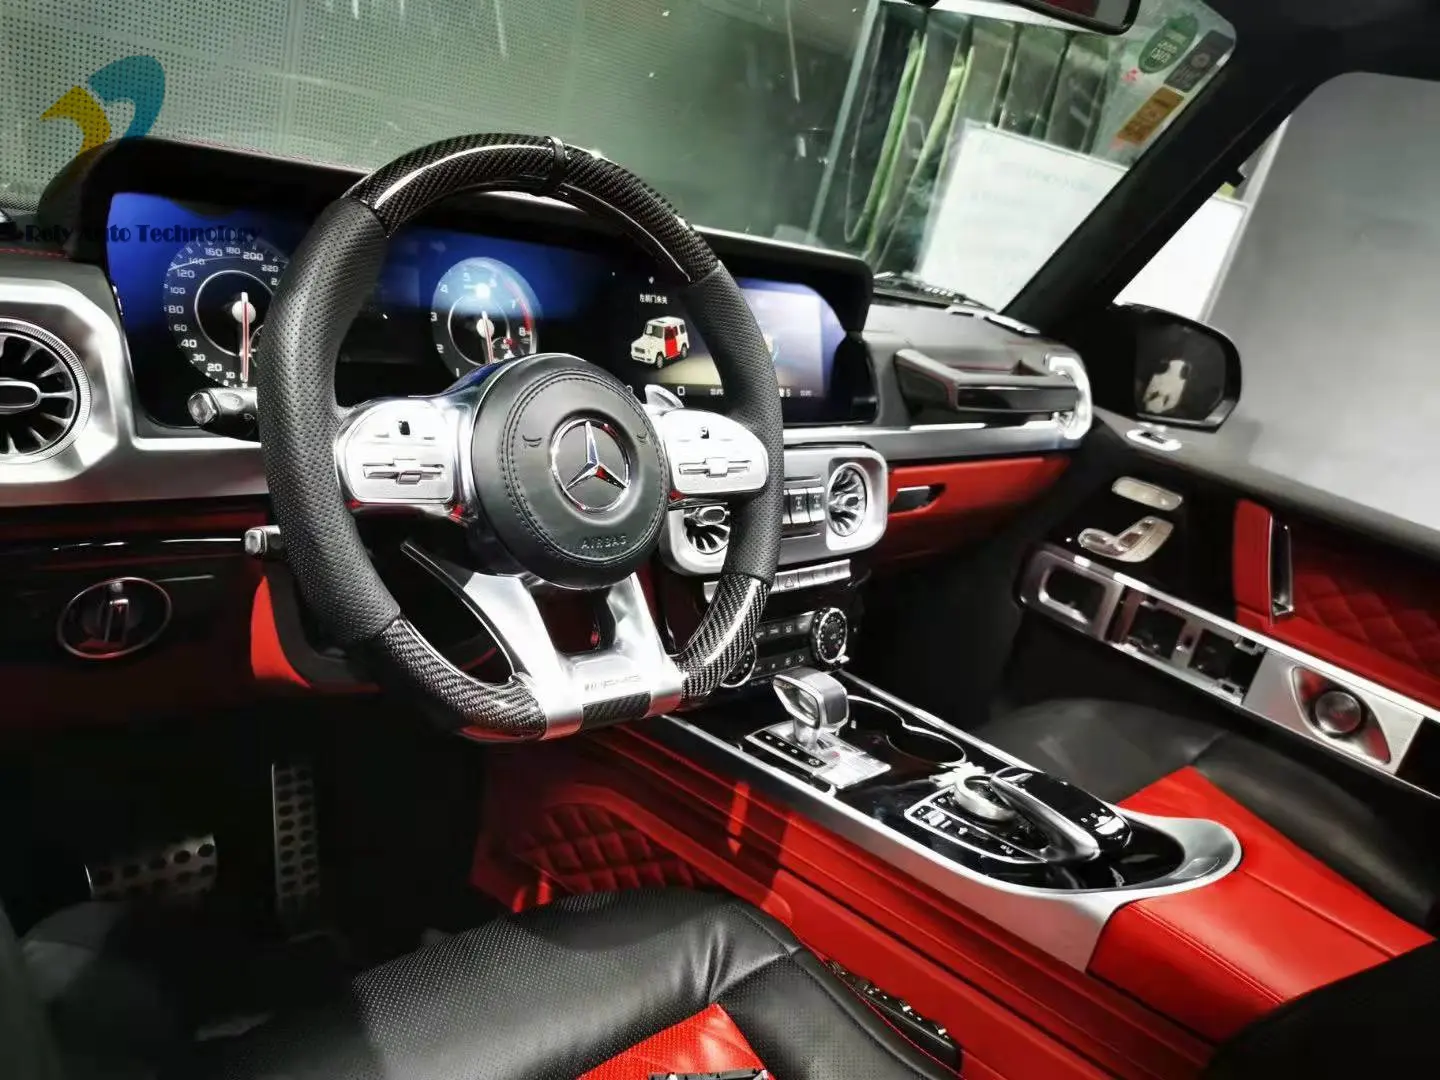 Auto-Tuning-Teile G500 GClass Interior Modifided Decoration Kits G-Klasse/g Wagen-Interieur Upgrade-Kits